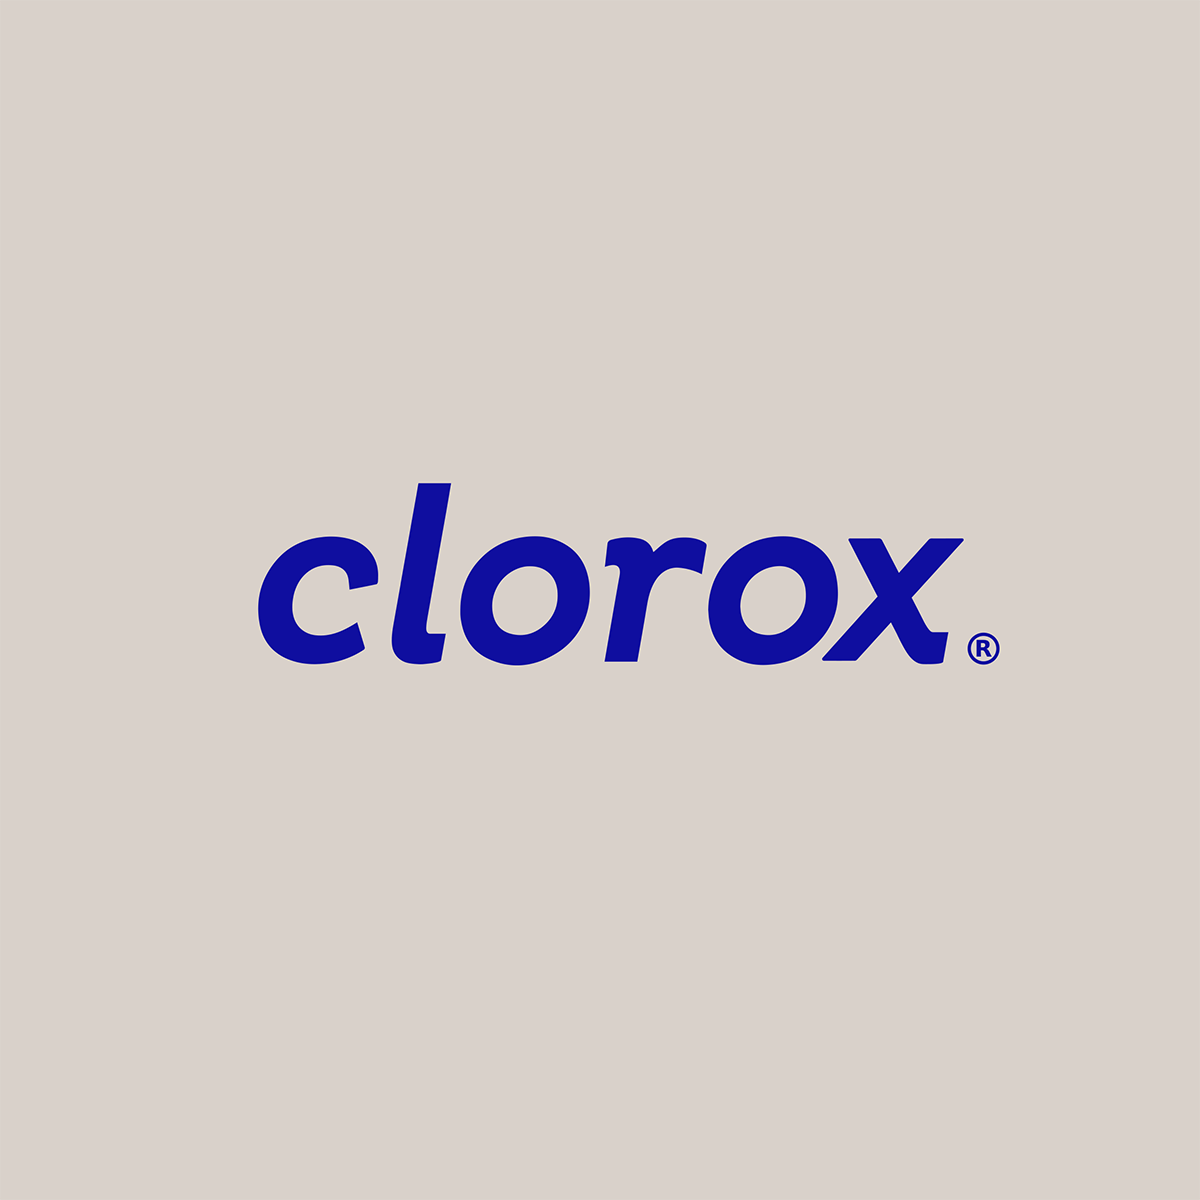 Clorox Rebranding